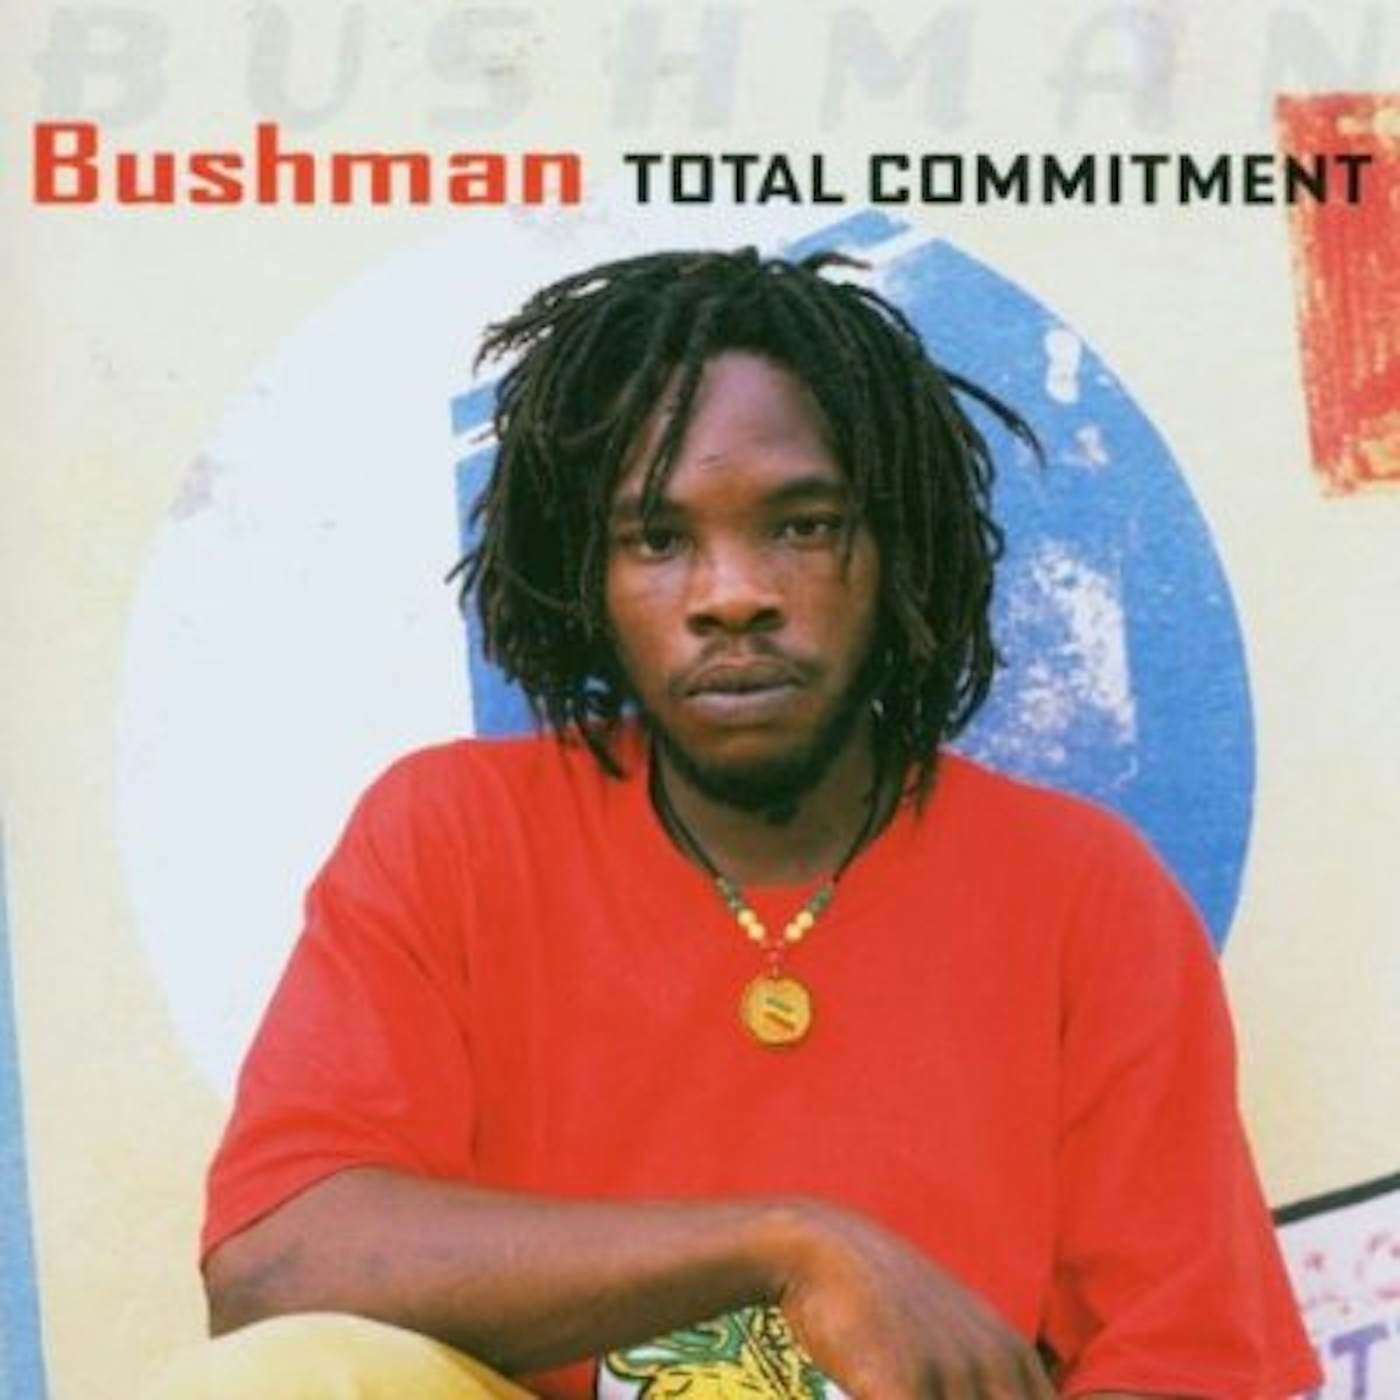 Bushman TOTAL COMMITMENT CD